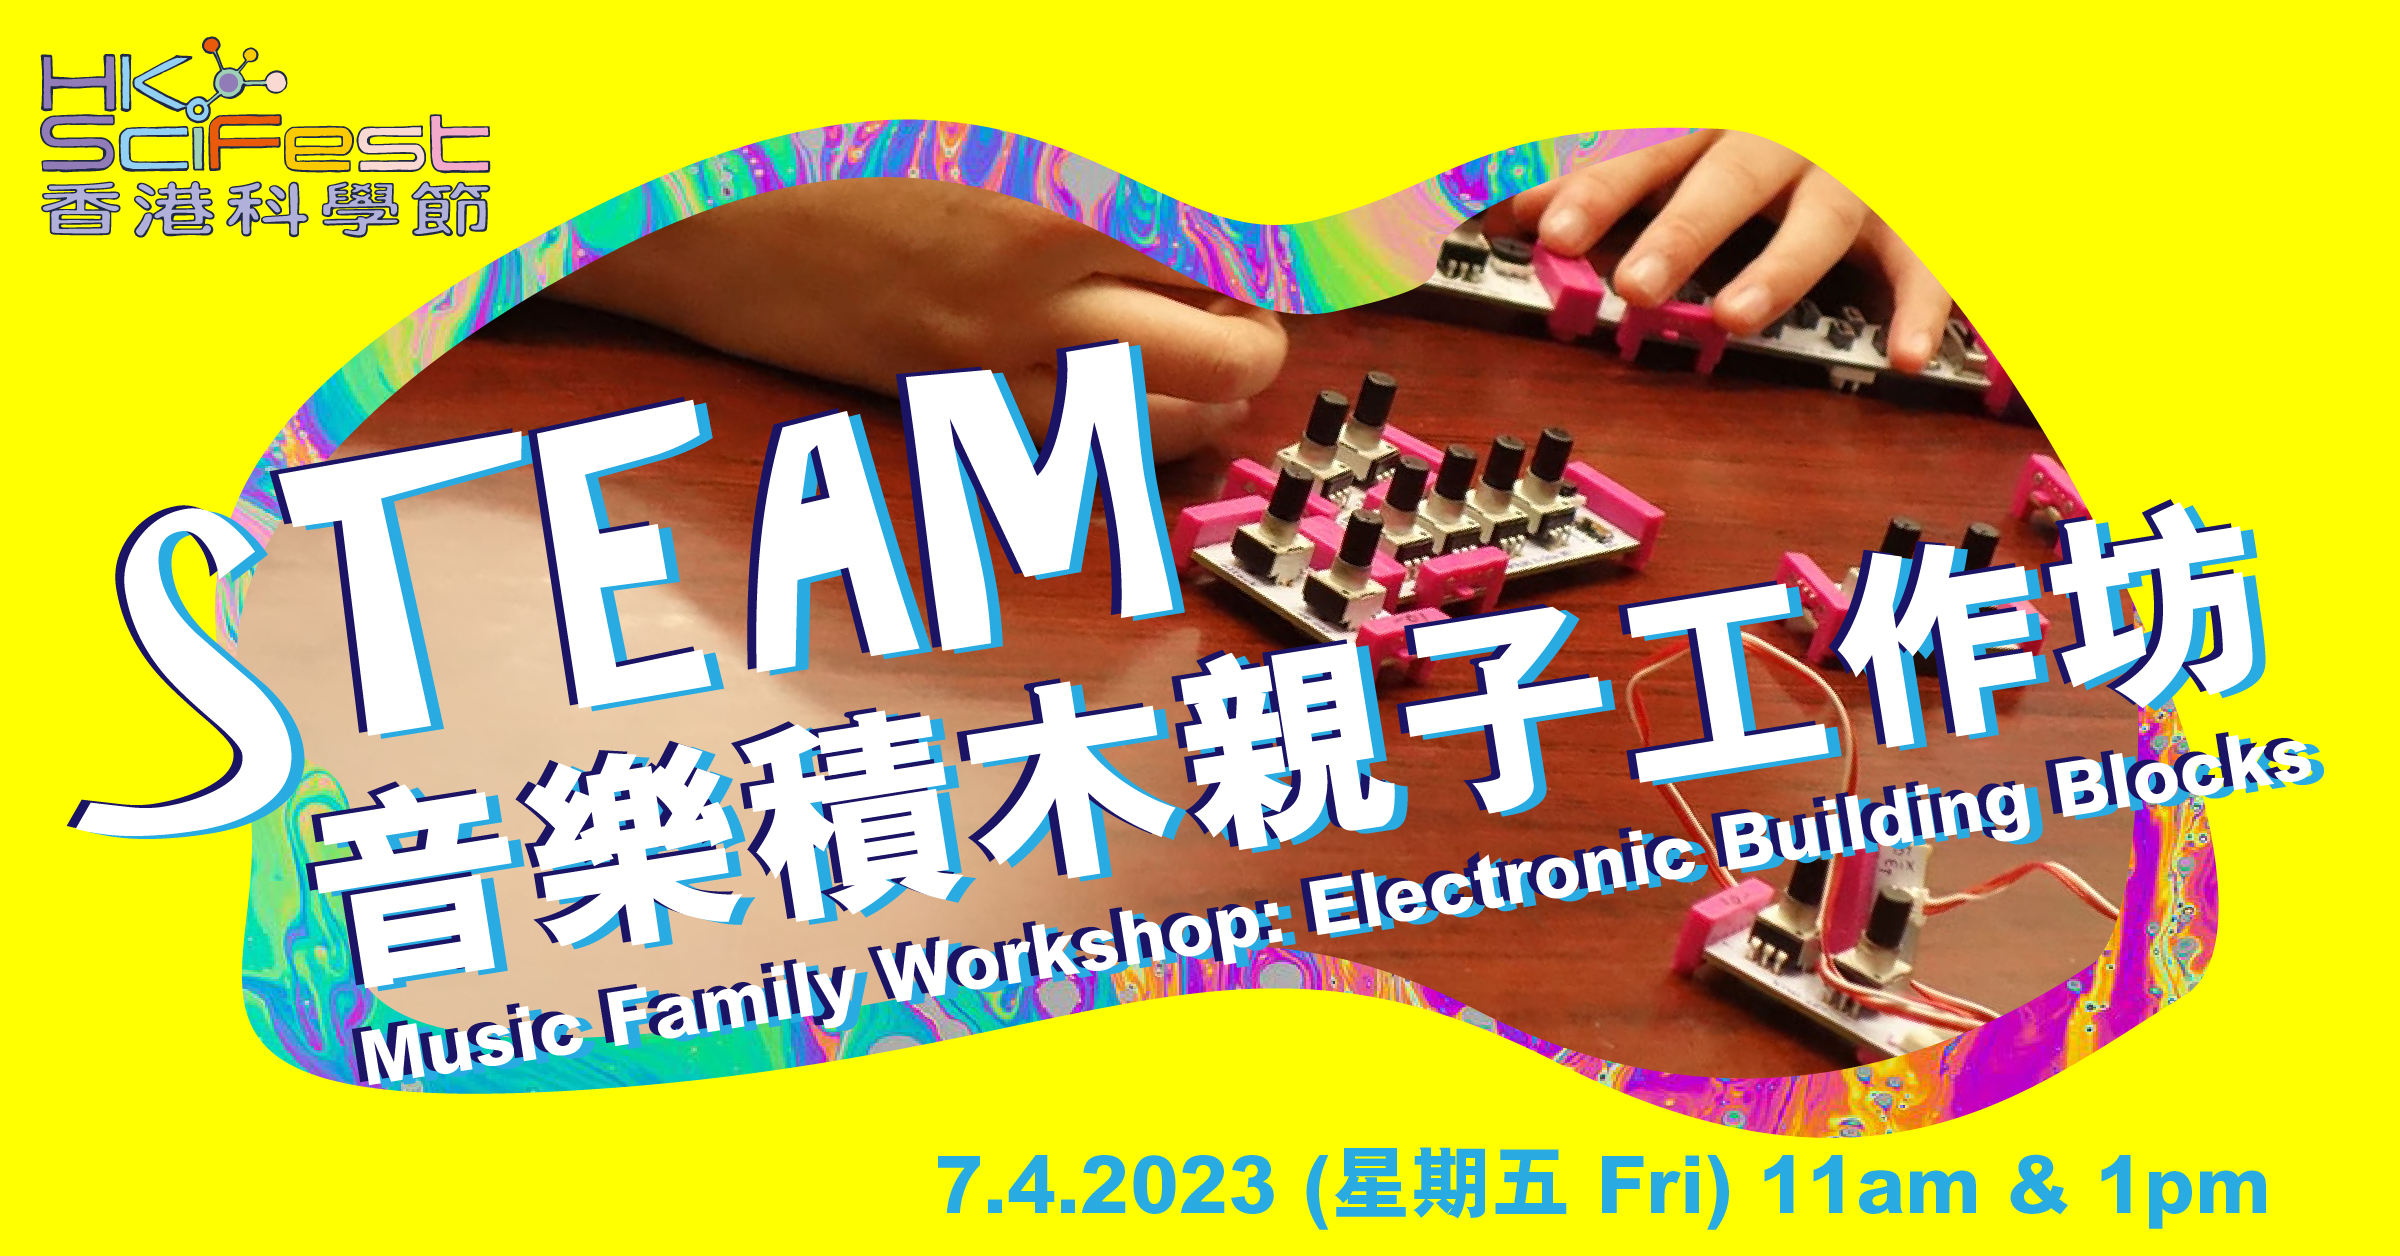 HK SciFest 2023：STEAM Music Family Workshops - Electronic Building Blocks